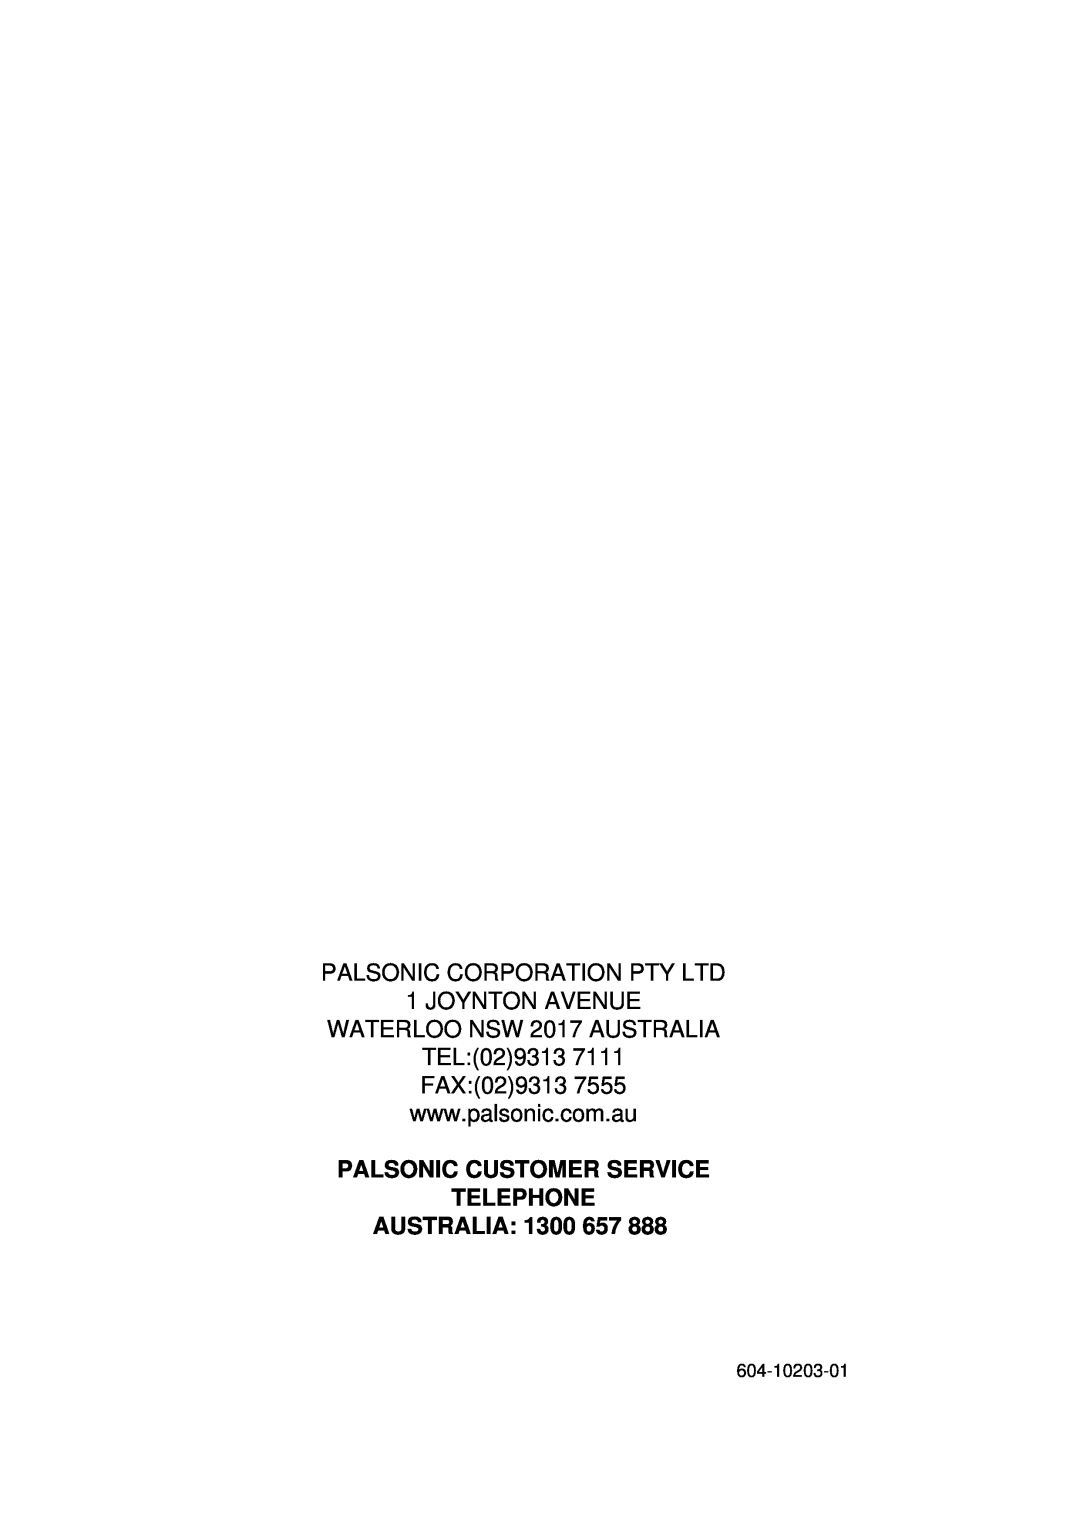 Palsonic 2418 PALSONIC CUSTOMER SERVICE TELEPHONE AUSTRALIA 1300 657, JOYNTON AVENUE WATERLOO NSW 2017 AUSTRALIA TEL029313 